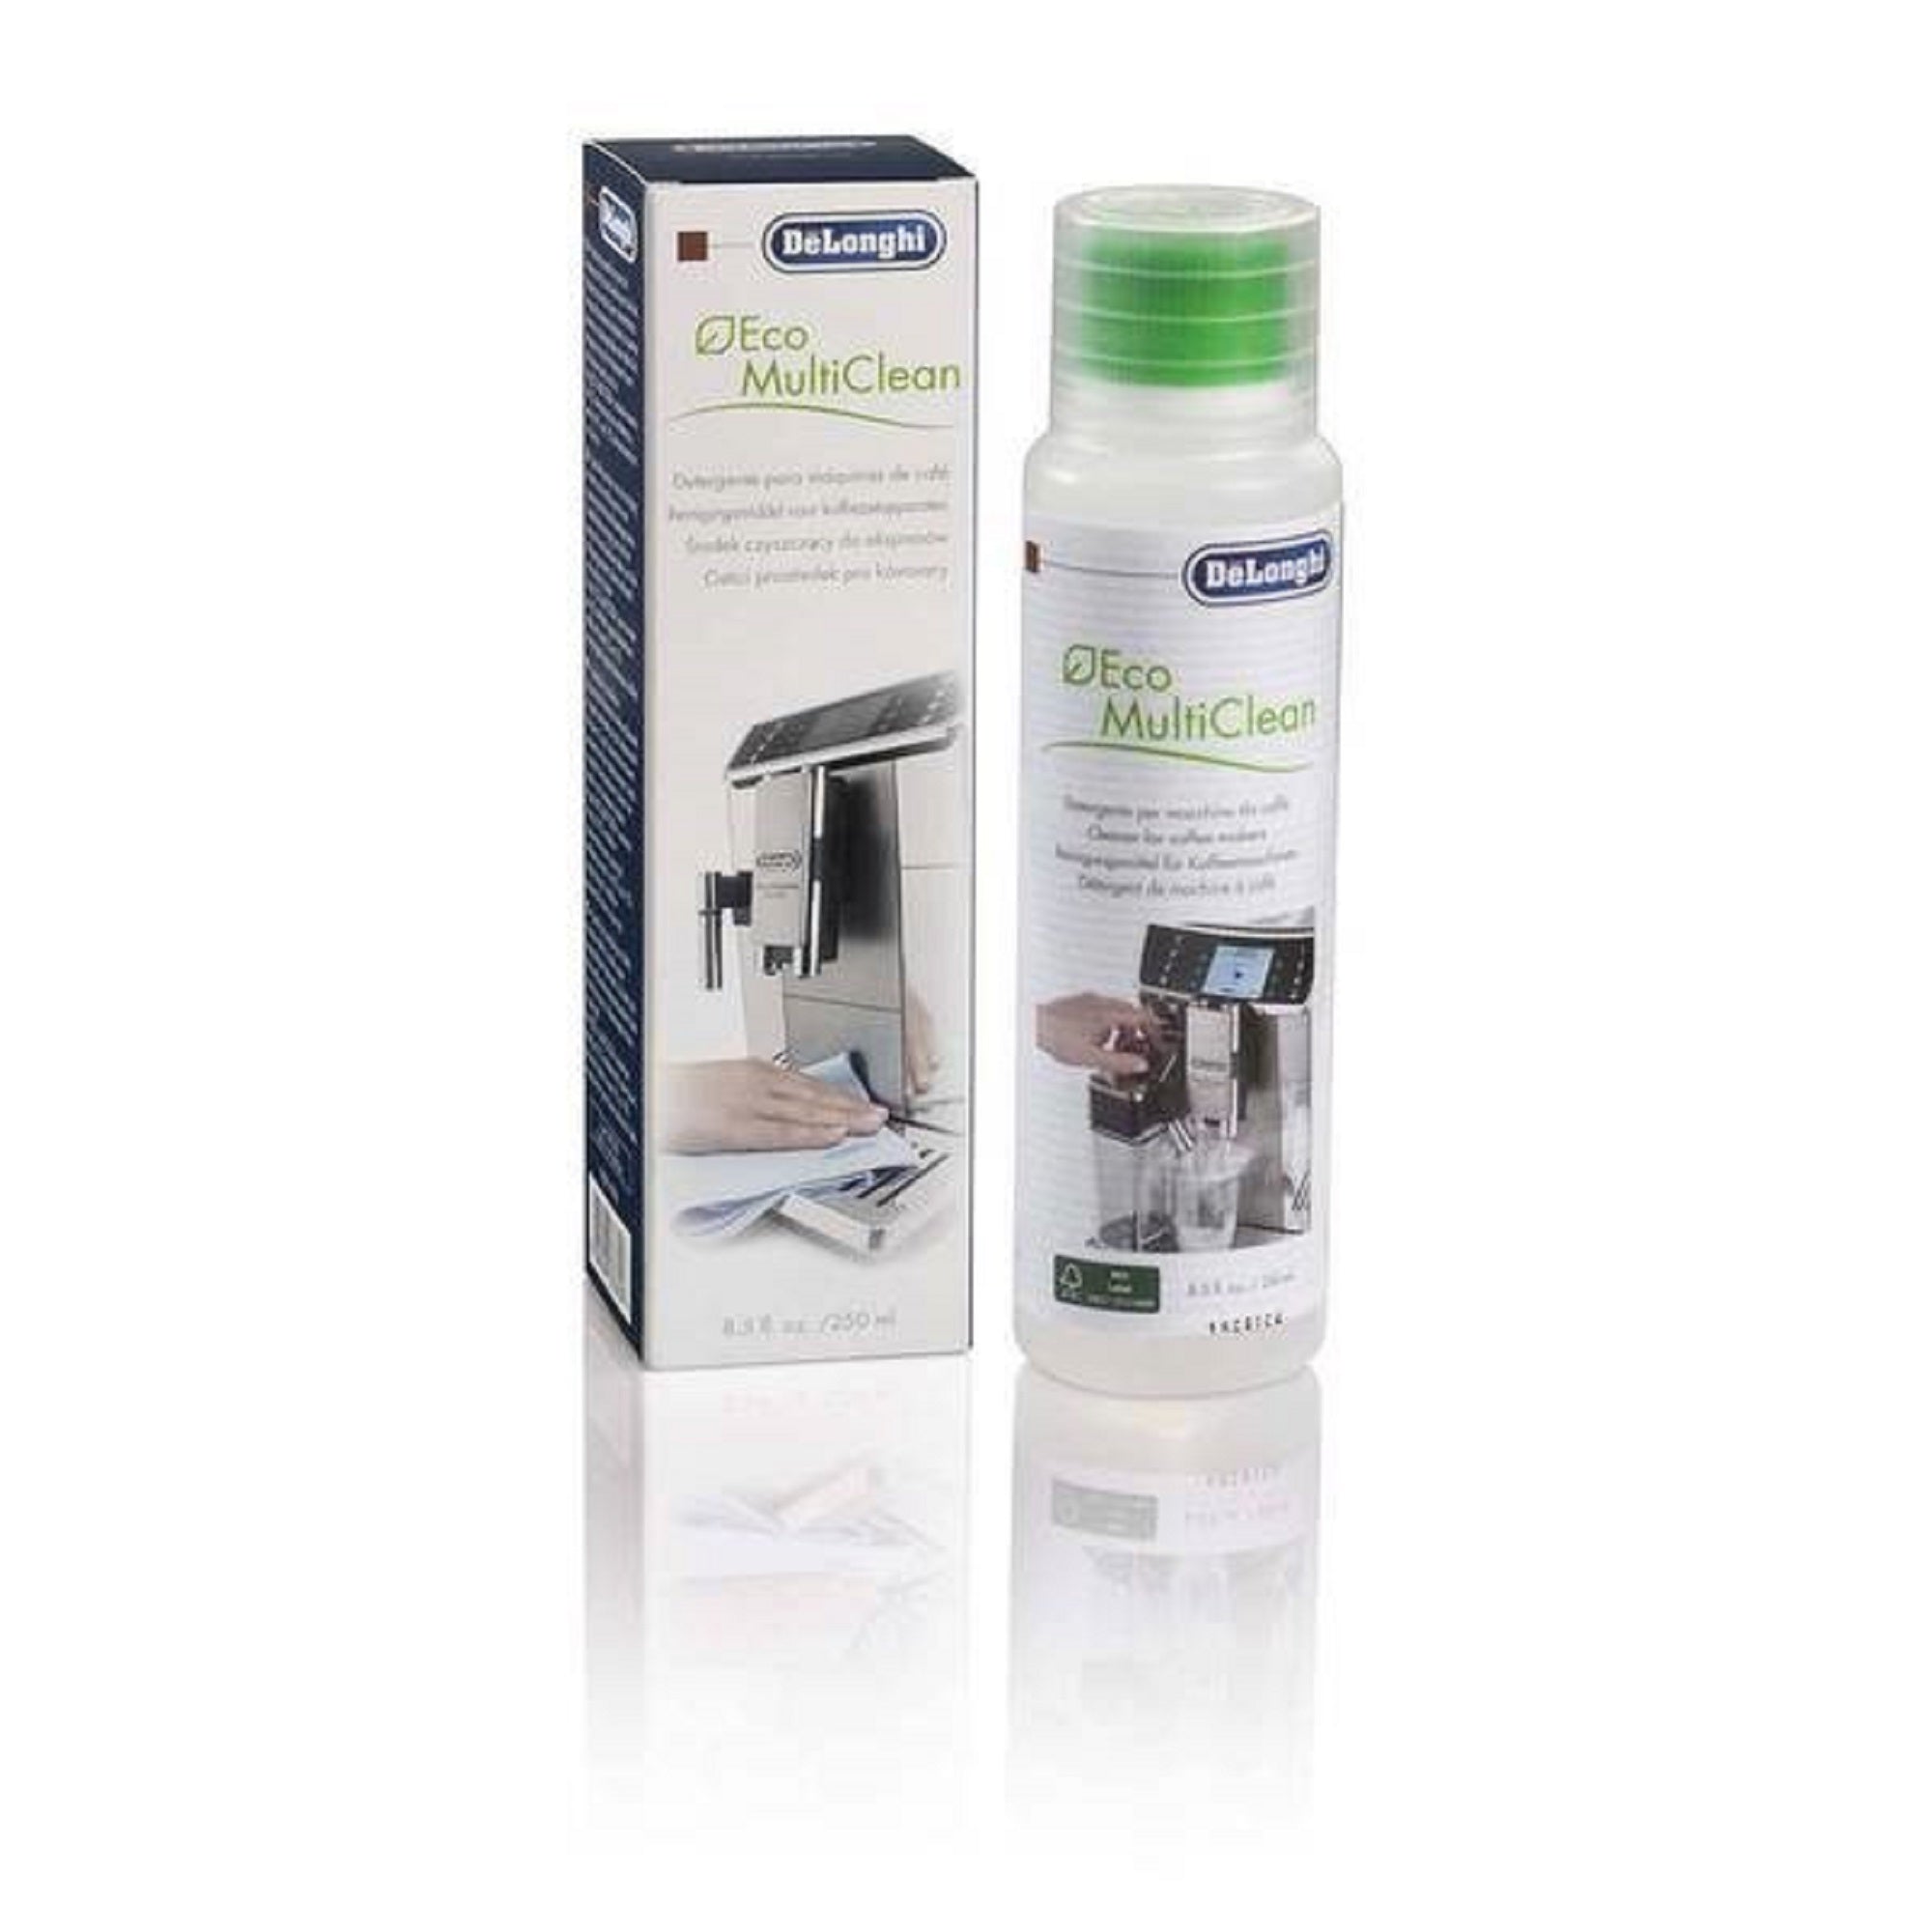 De’Longhi Eco MultiClean Milk system cleaner DLSC550 & Coffee Bundle - Velo Coffee Roasters